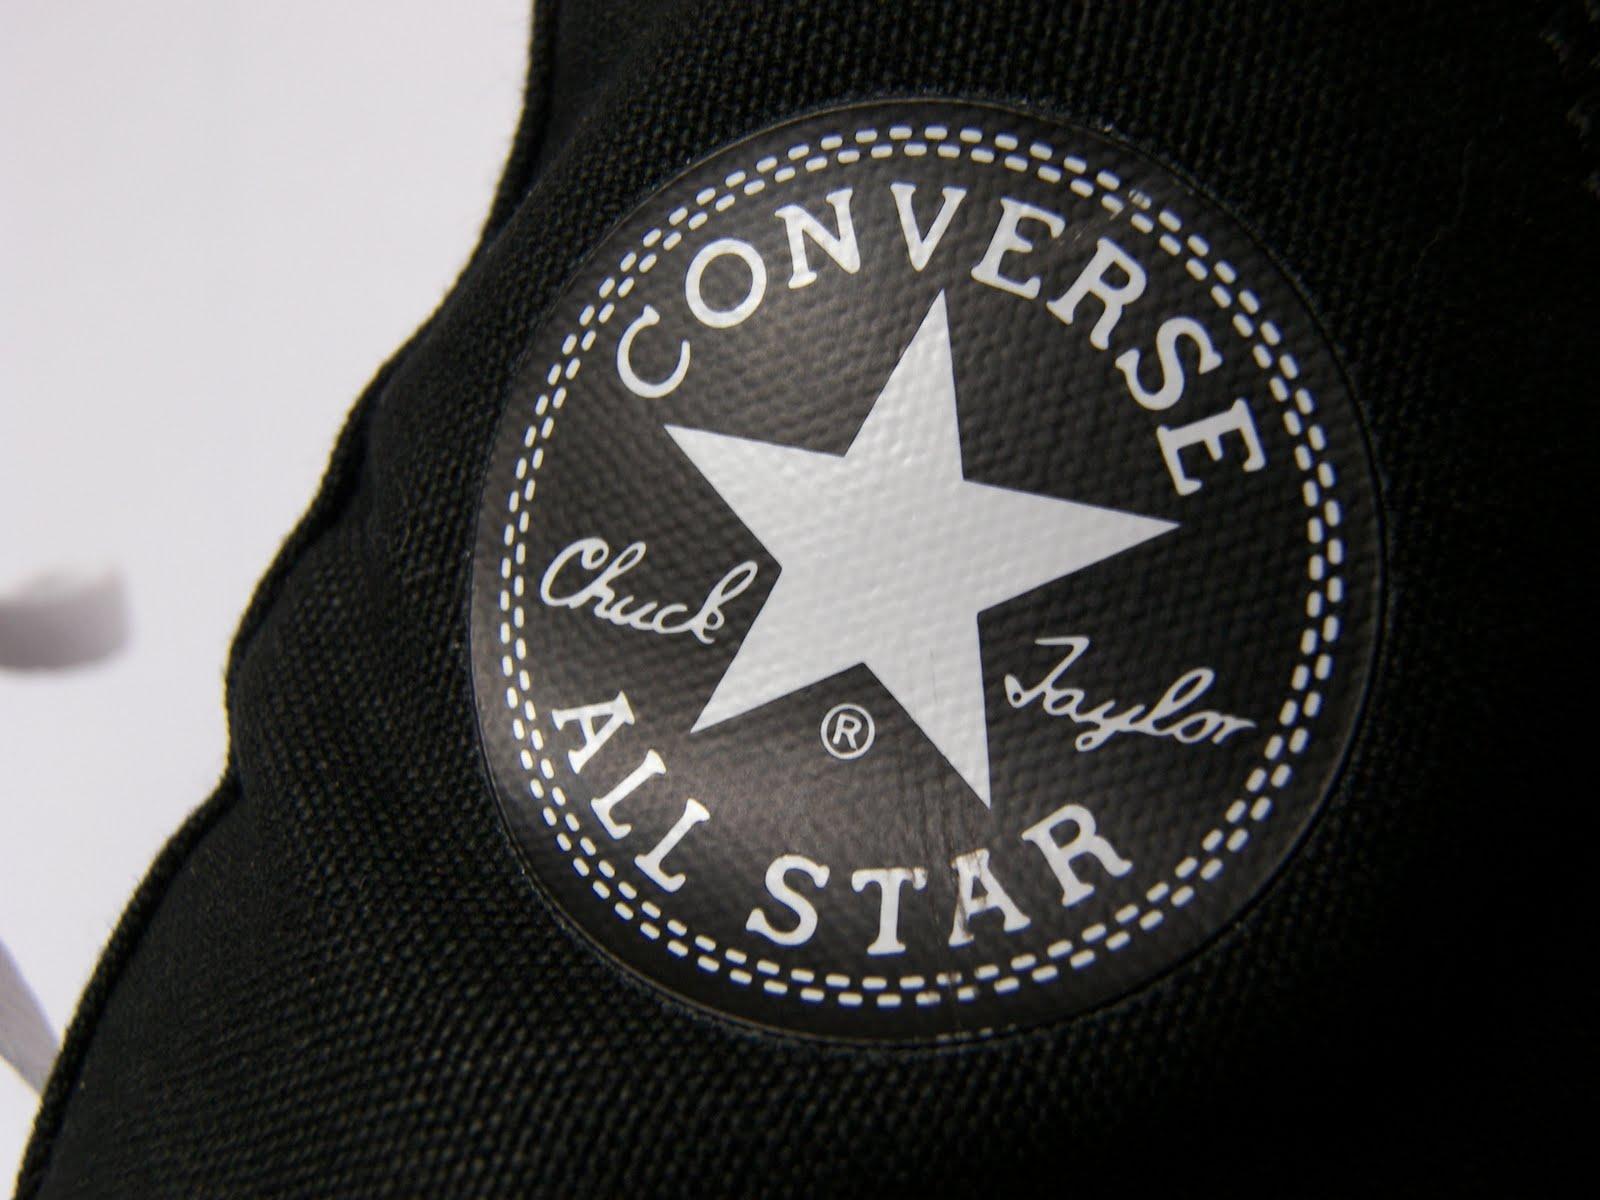 Converse All Star Logos Wallpaper 2014 HD. I HD Image